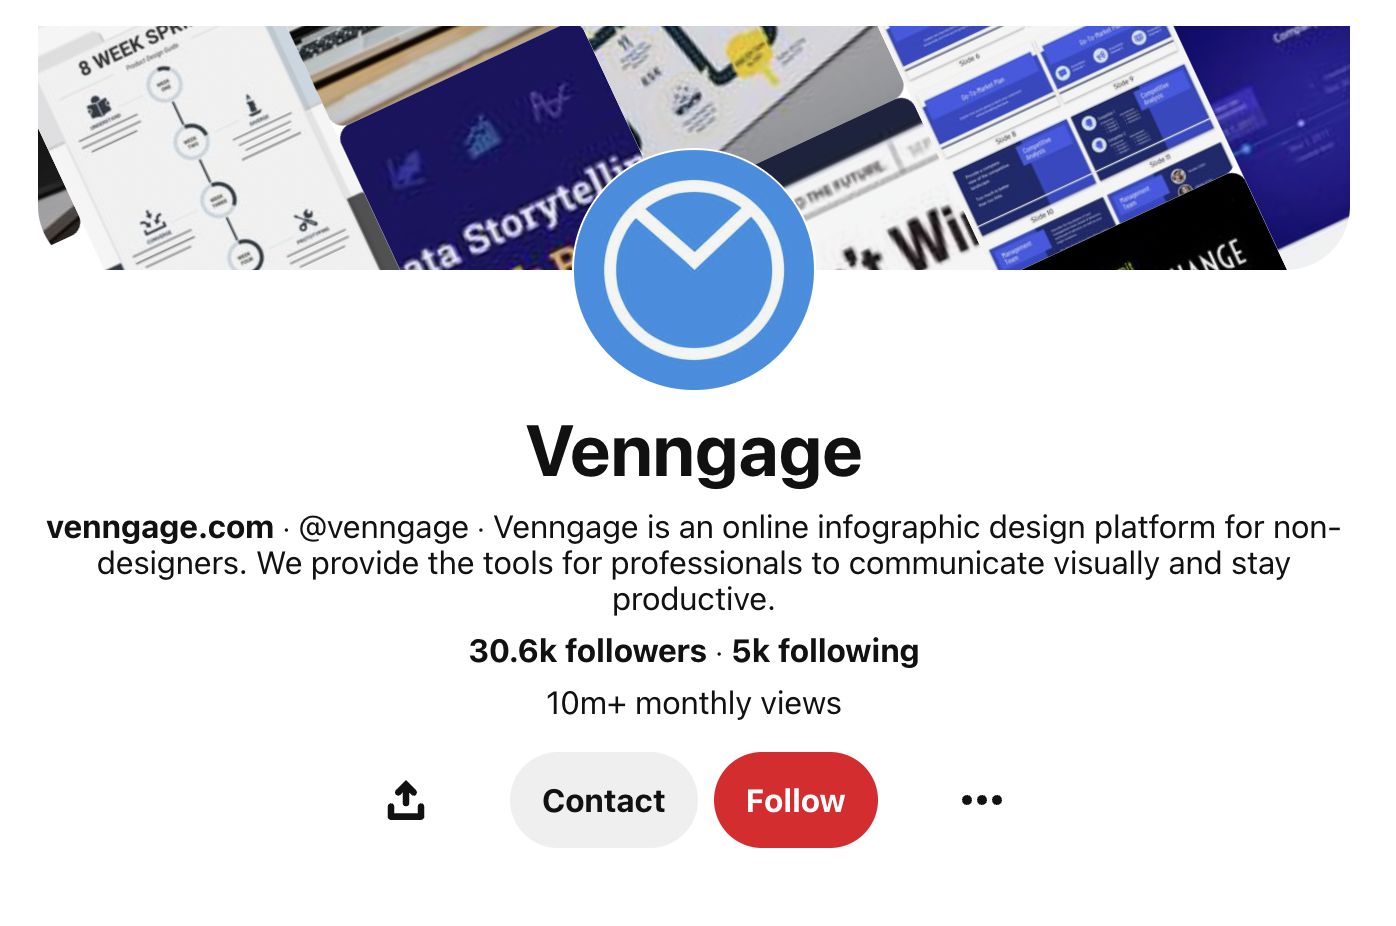 Venngage's Pinterest page